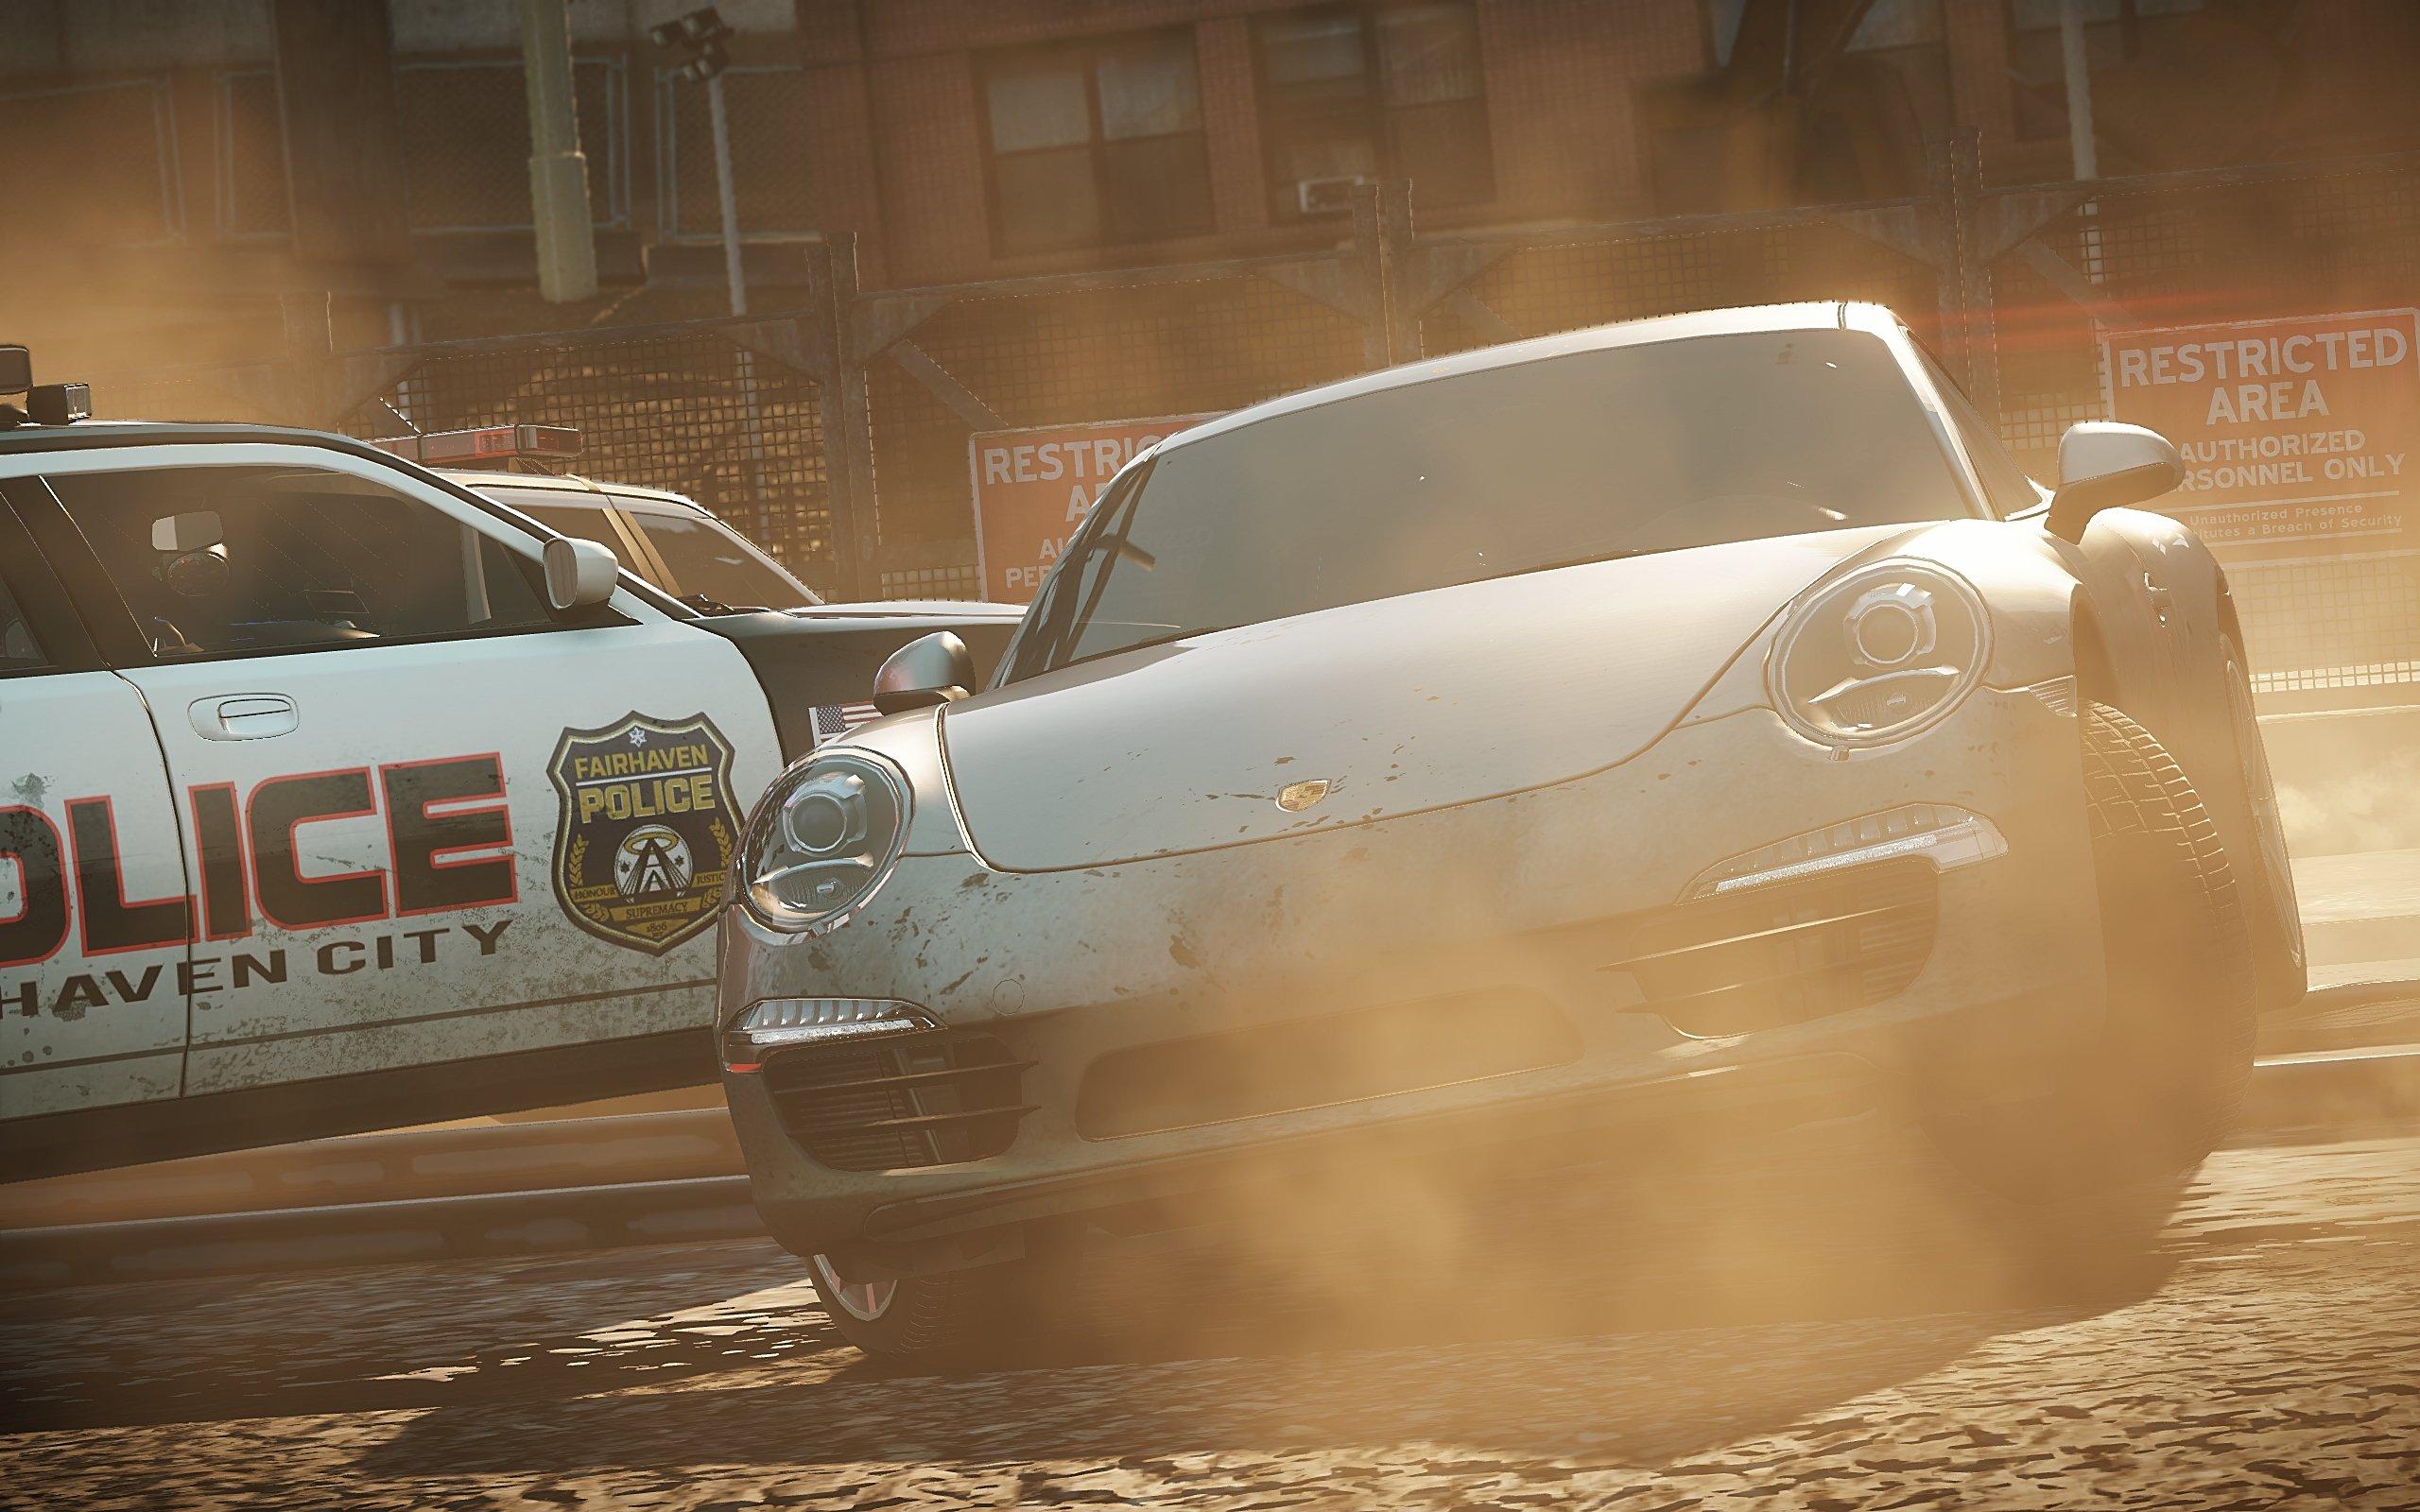 Need For Speed Most Wanted - Xbox 360 em Promoção na Americanas